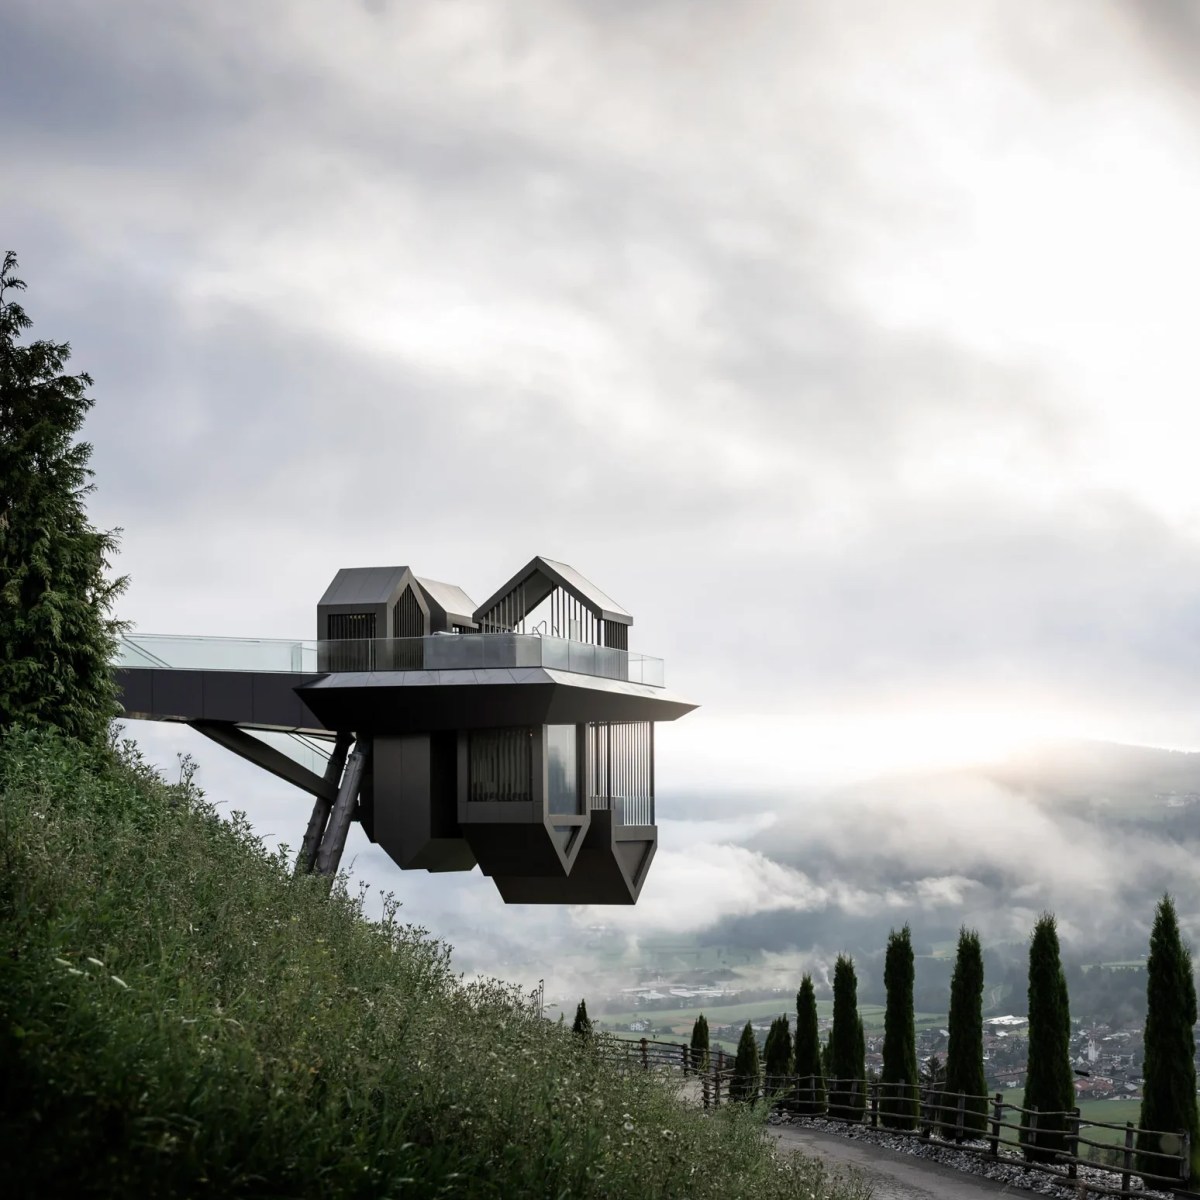 Hotel Hubertus’ “Hub of Huts” Wellness Area Resembles an Upside-Down Alpine Village – COOL HUNTING®